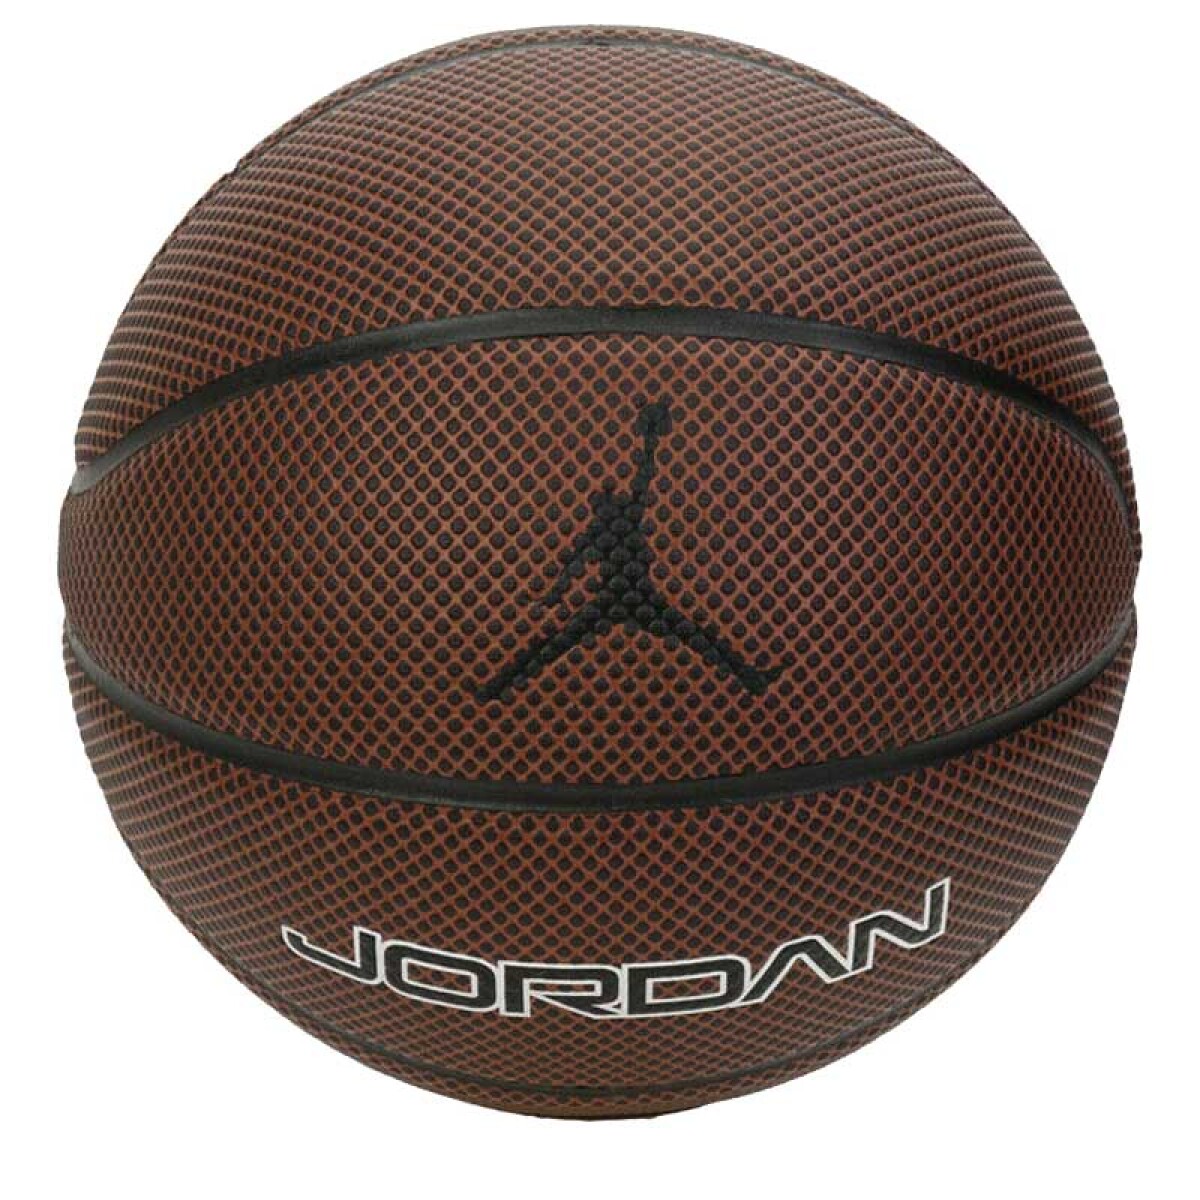 Pelota Basket Nike Jordan Legacy 8p 